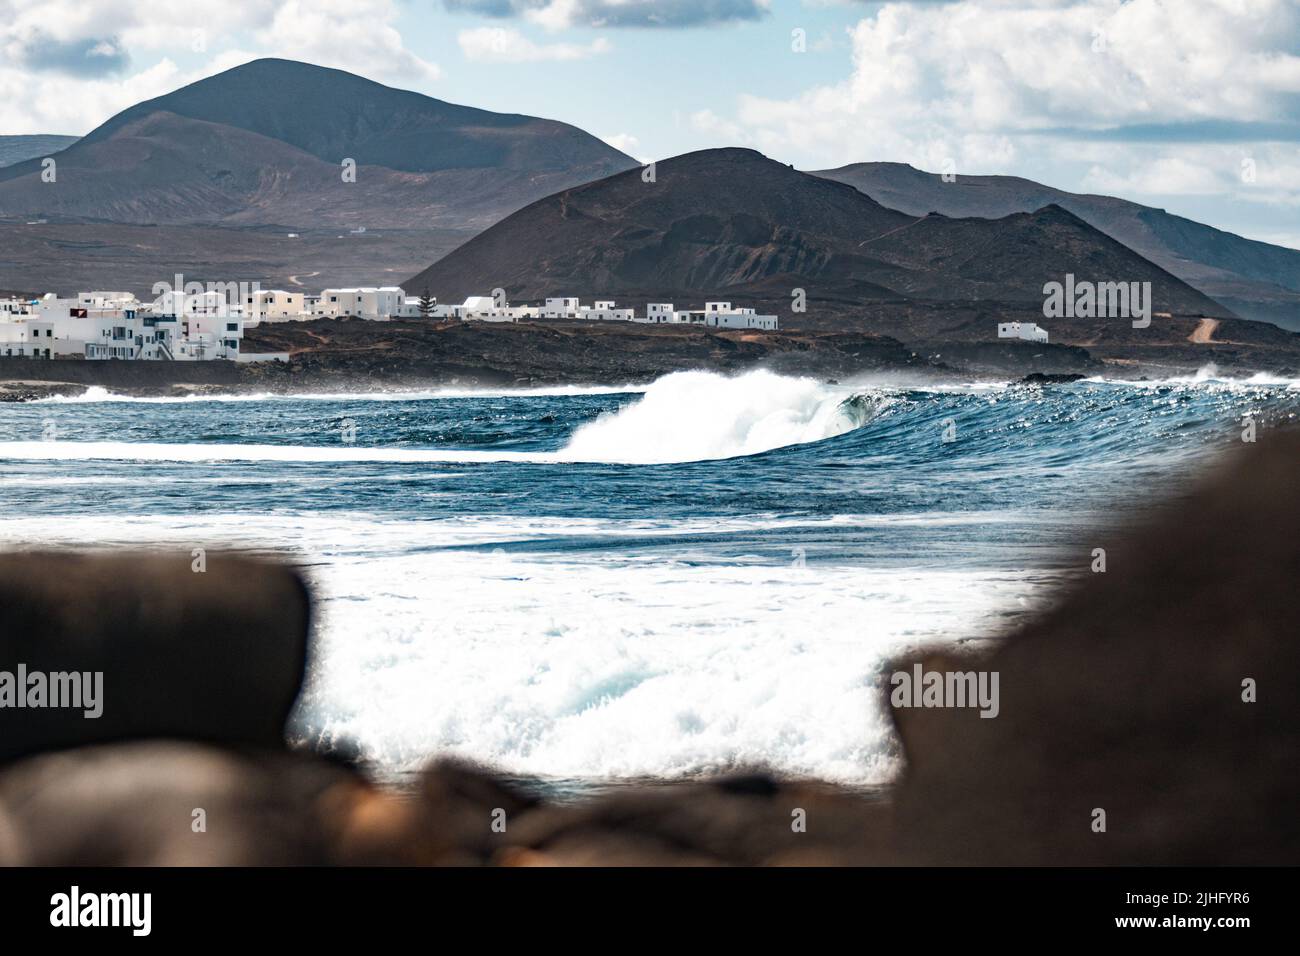 Wild rocky coastline of surf spot La Santa Lanzarote, Canary Islands, Spain. Surfer riding a big wave in rocky bay, volcano mountain in background. Stock Photo